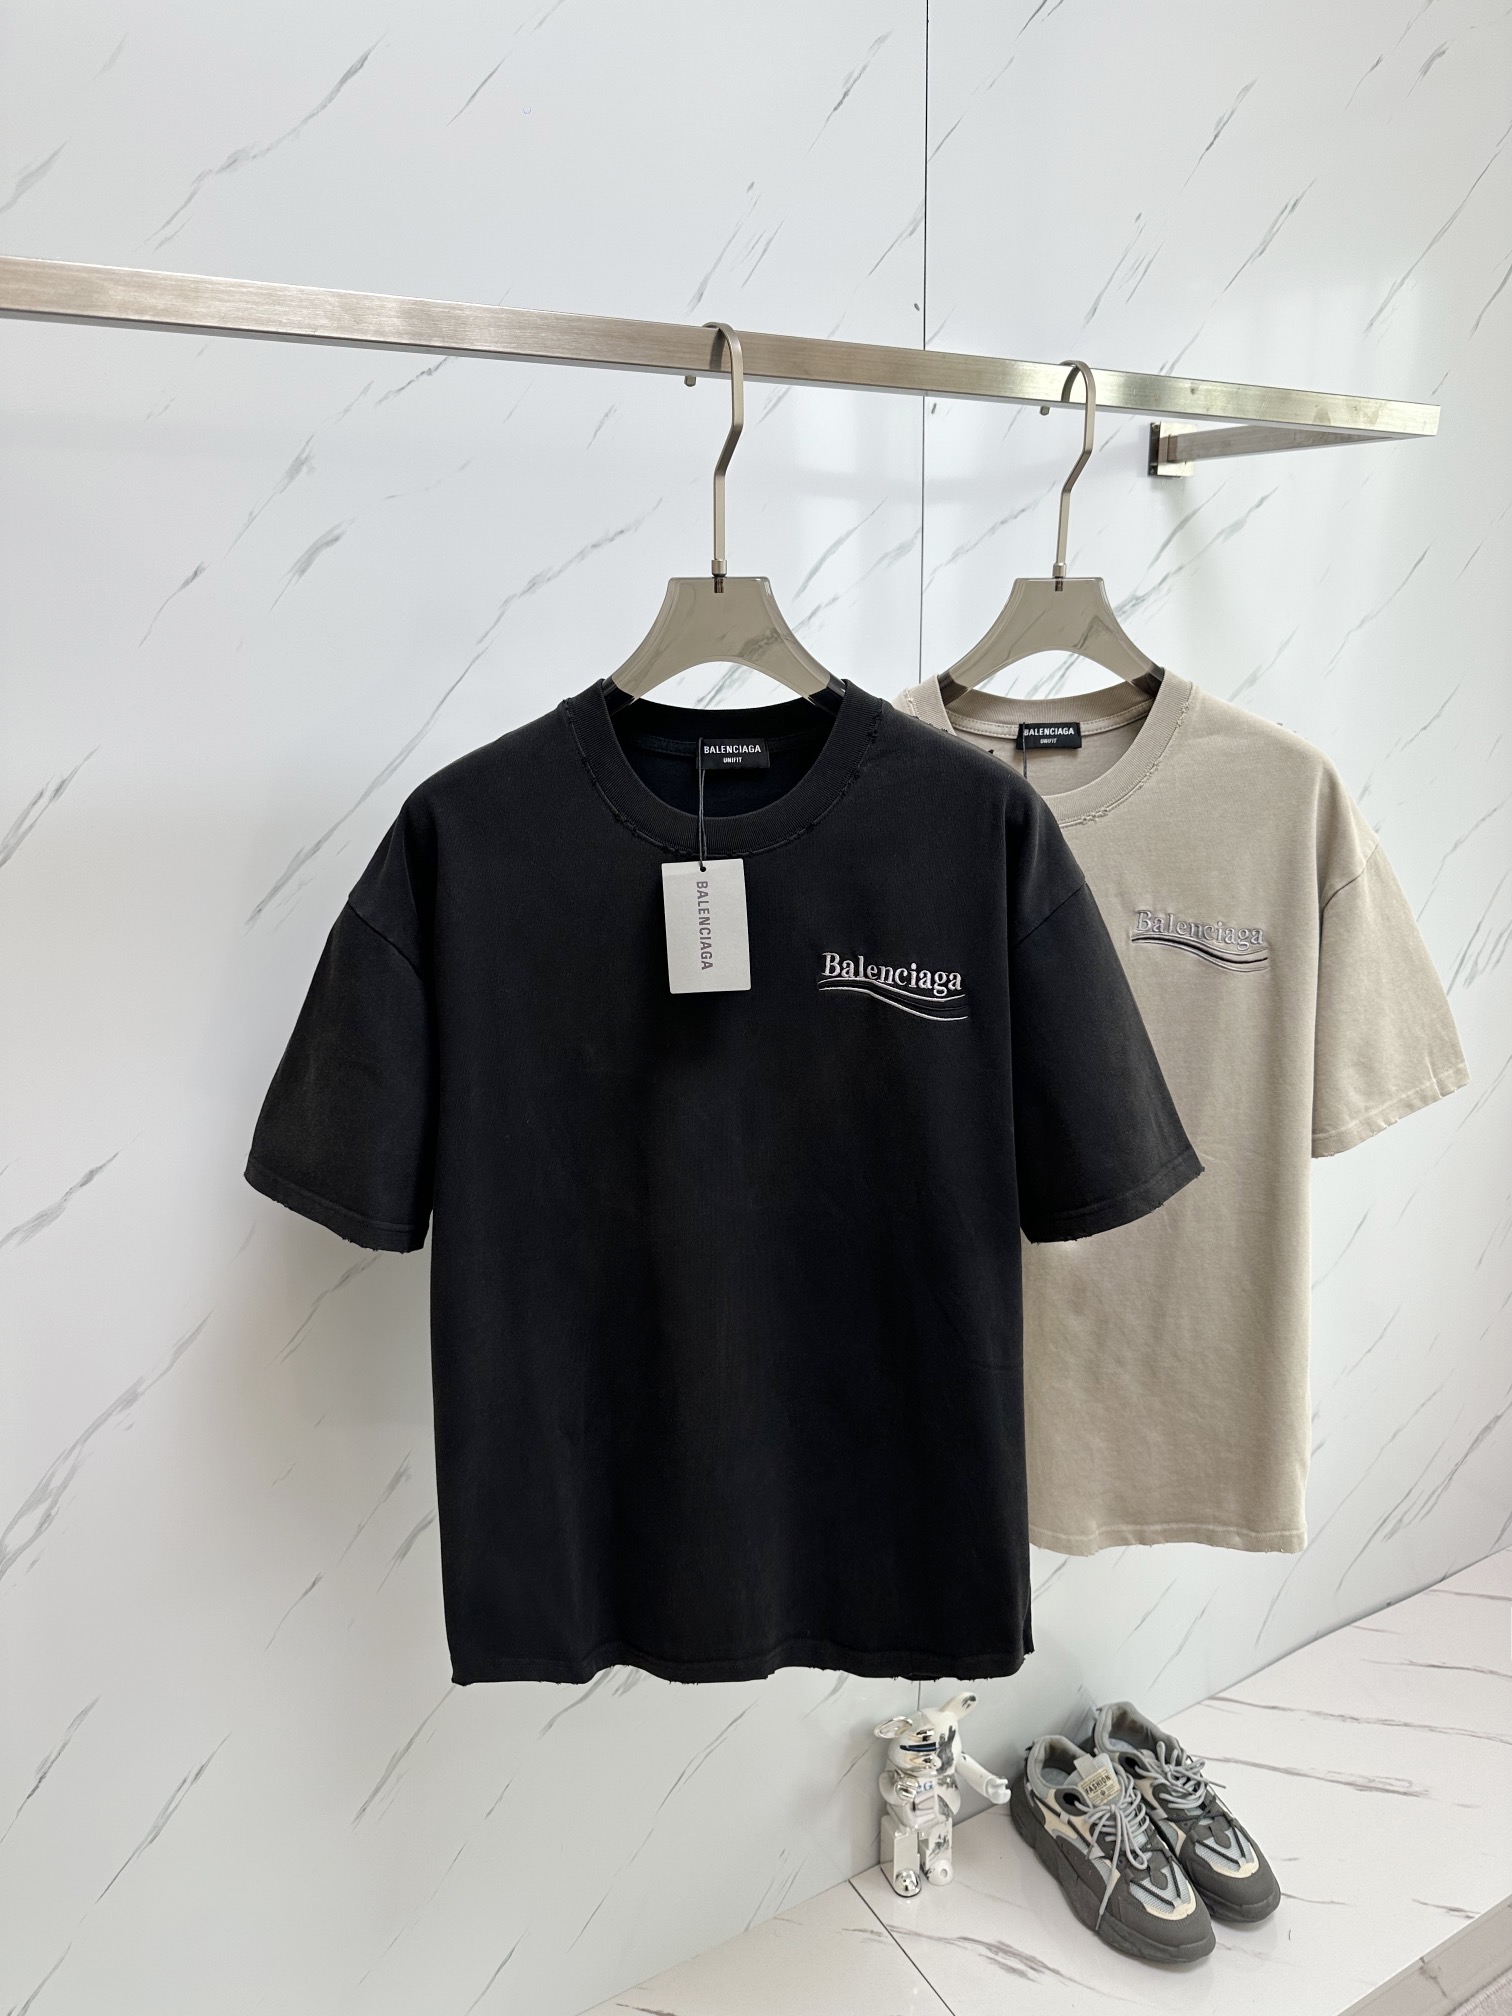 Balenciaga Clothing T-Shirt Unisex Spring/Summer Collection Short Sleeve